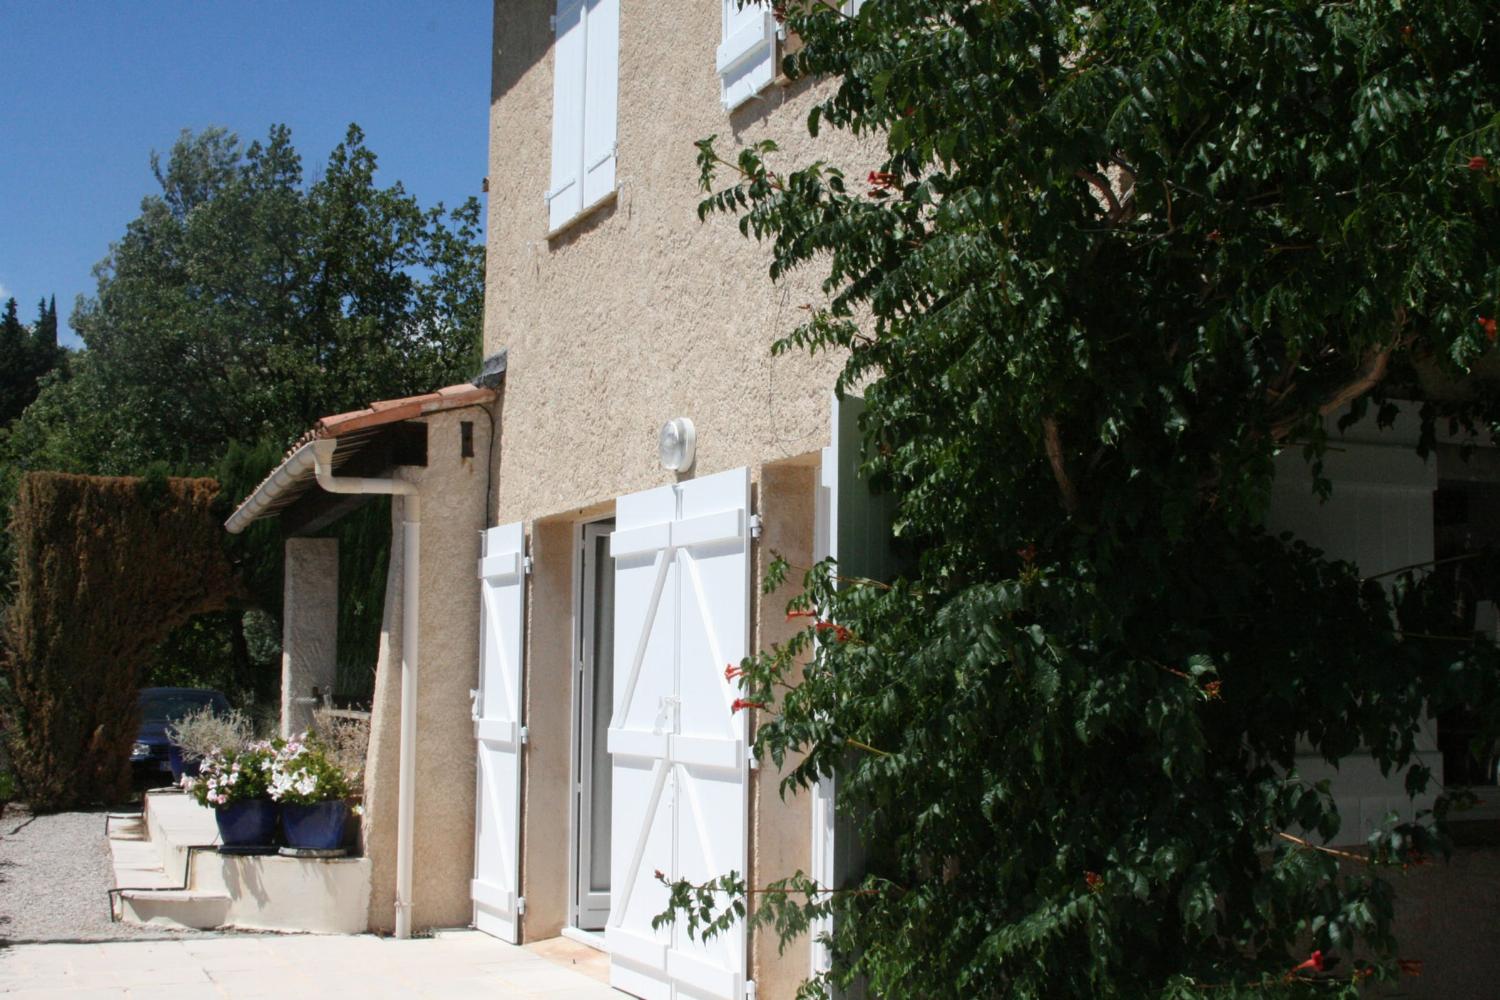 Holiday villa in Provence